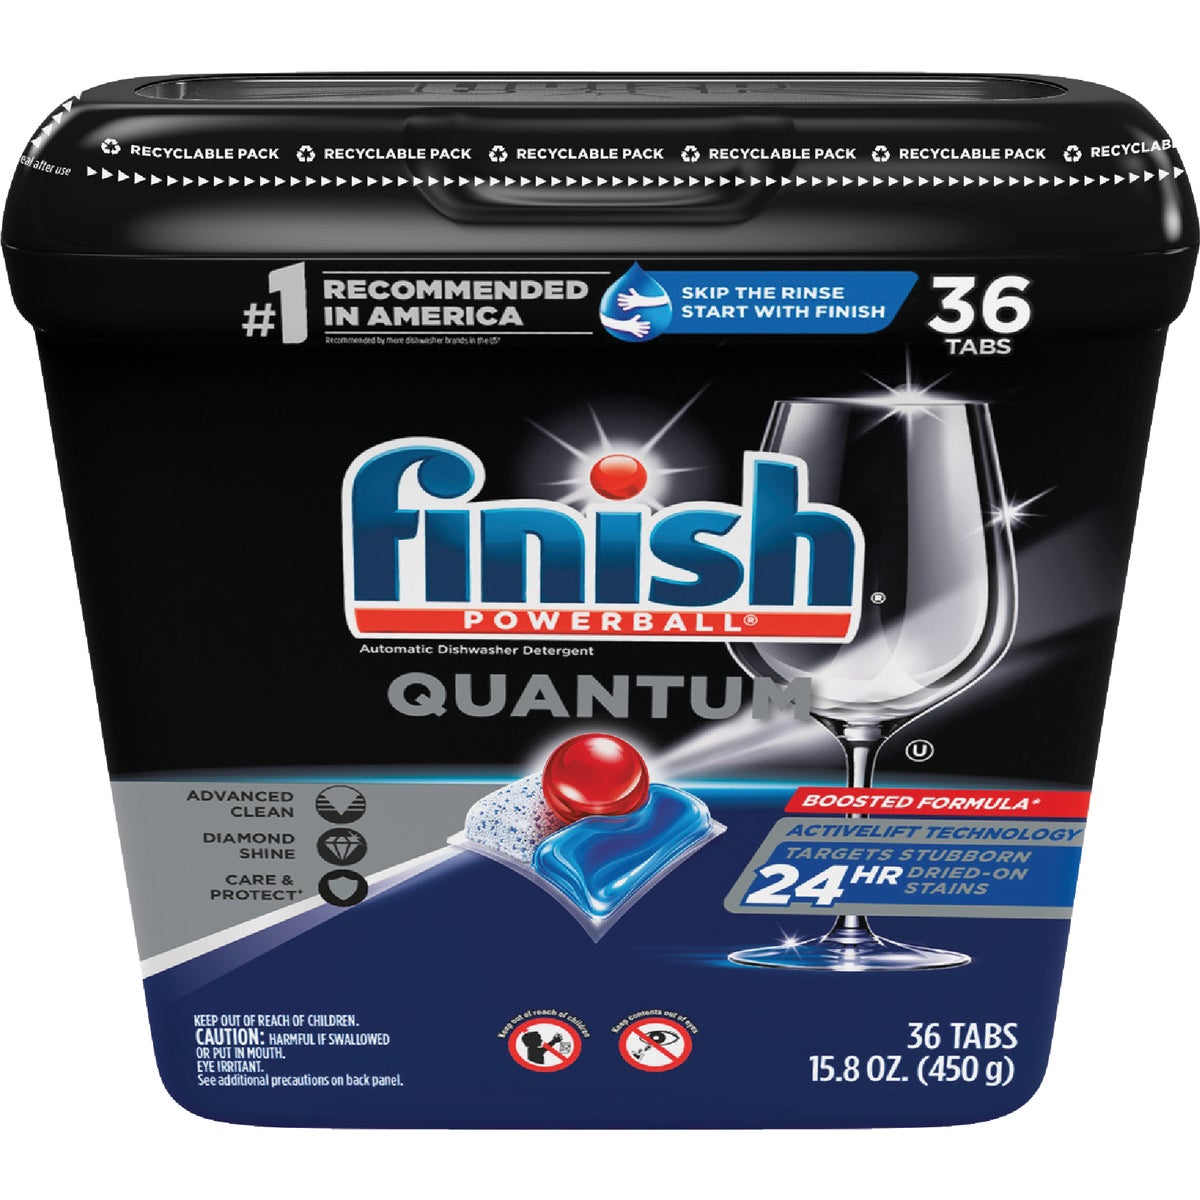 Finish Powerball Quantum Dishwasher Detergent (37-Count)